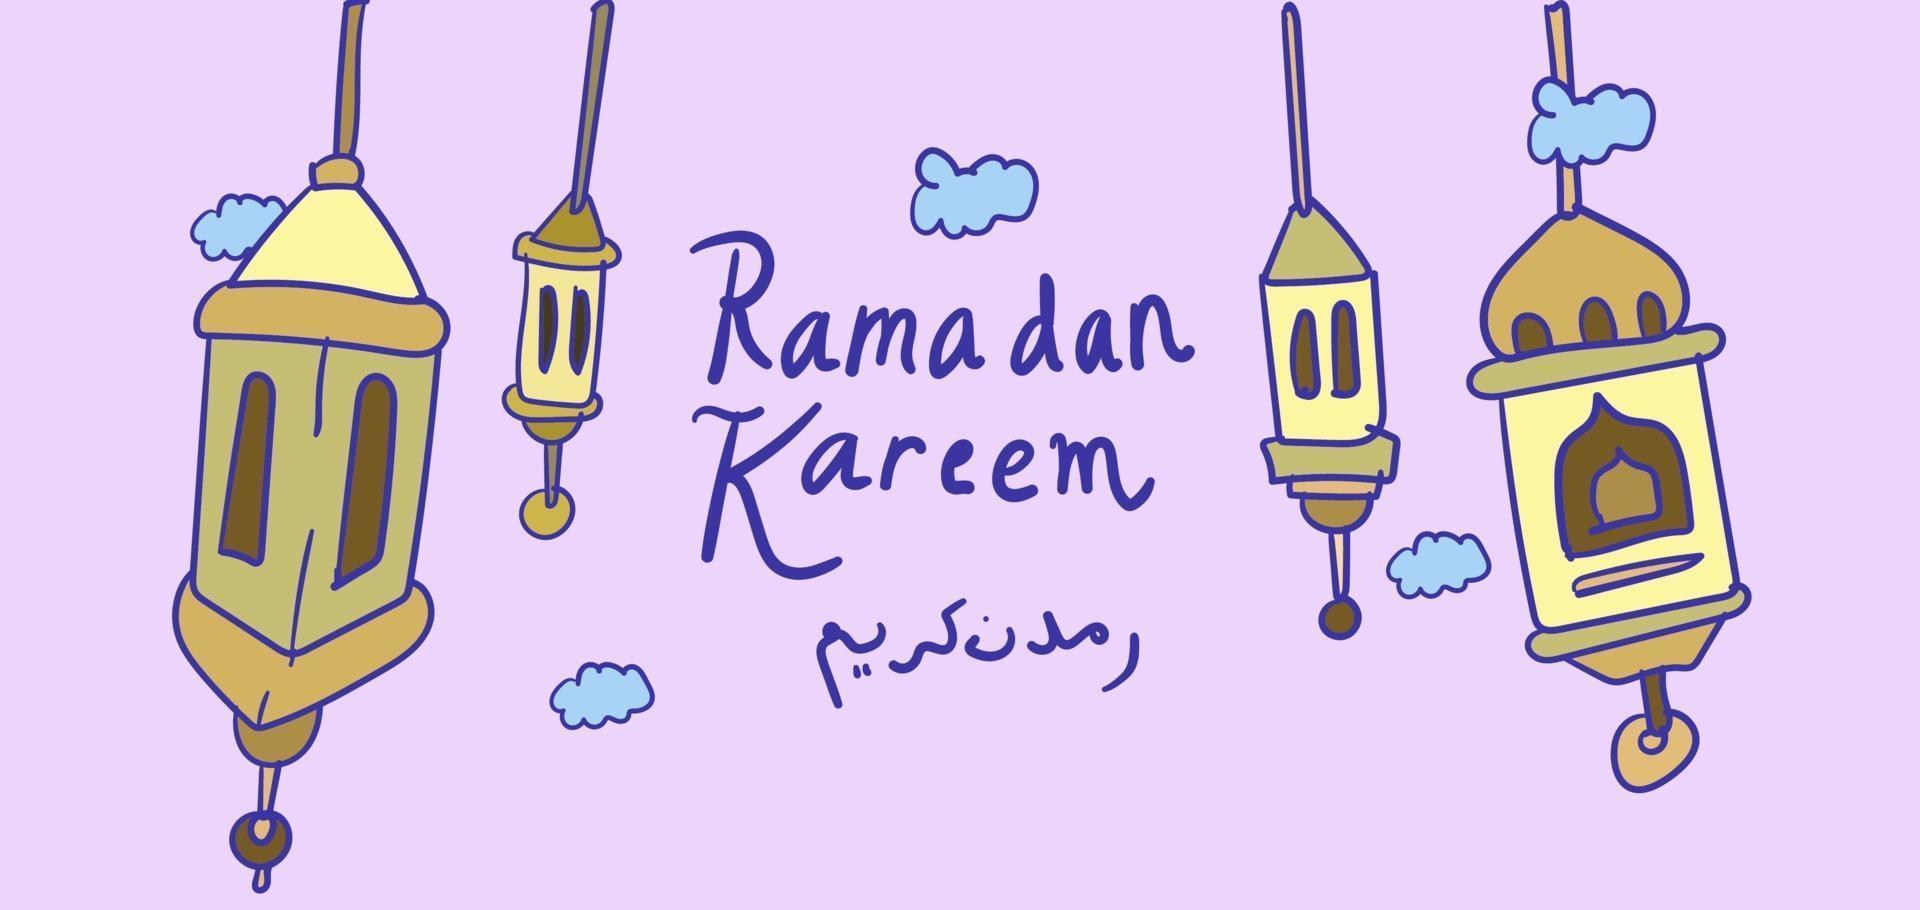 Ramadan kareem islamic mosque kids hand drawn greeting vector